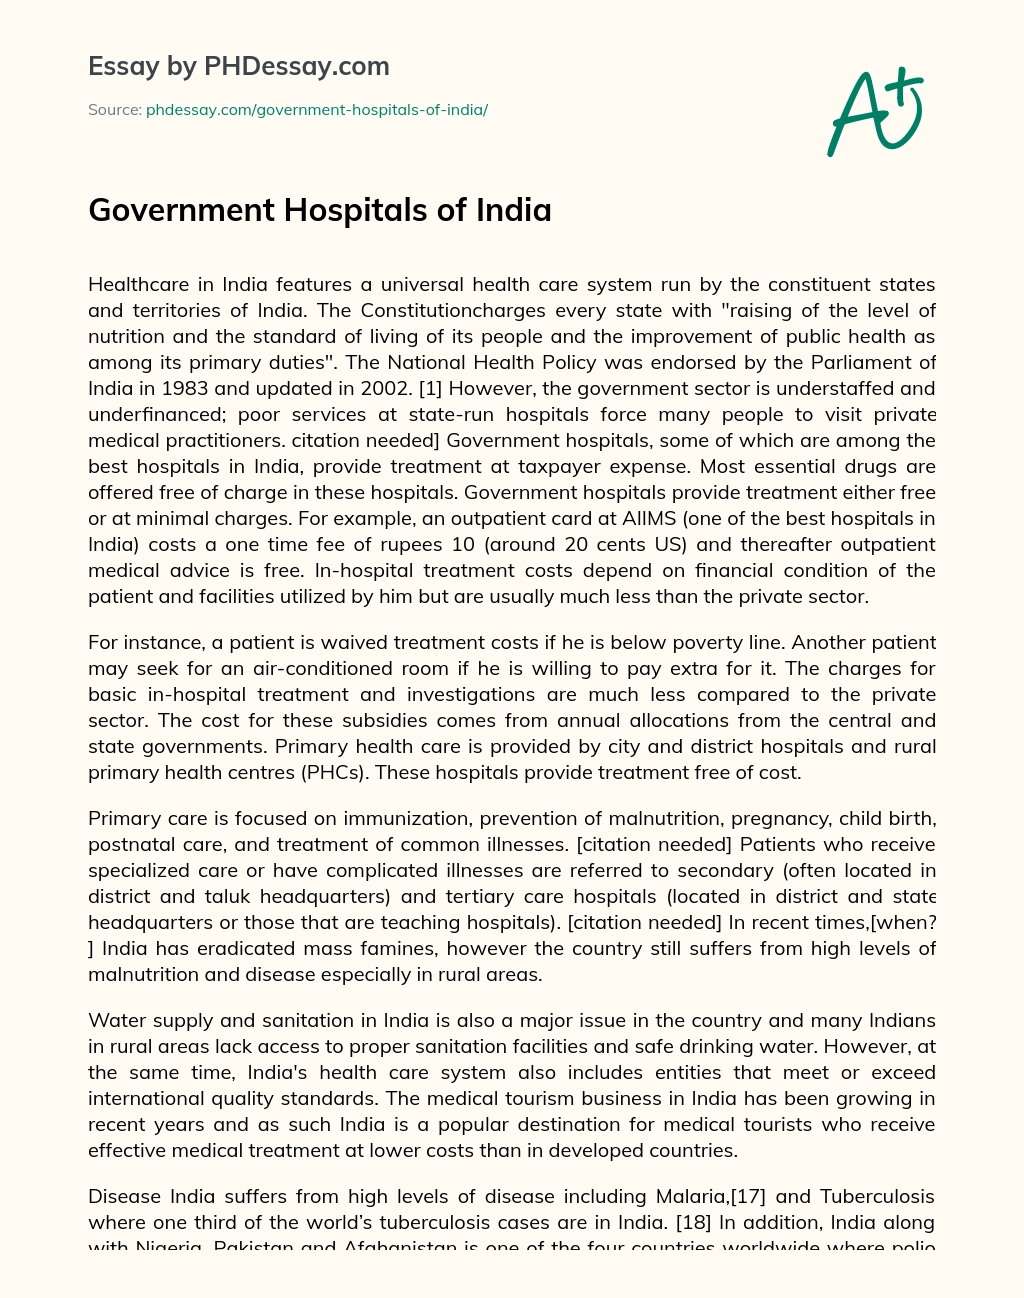 Government Hospitals of India essay